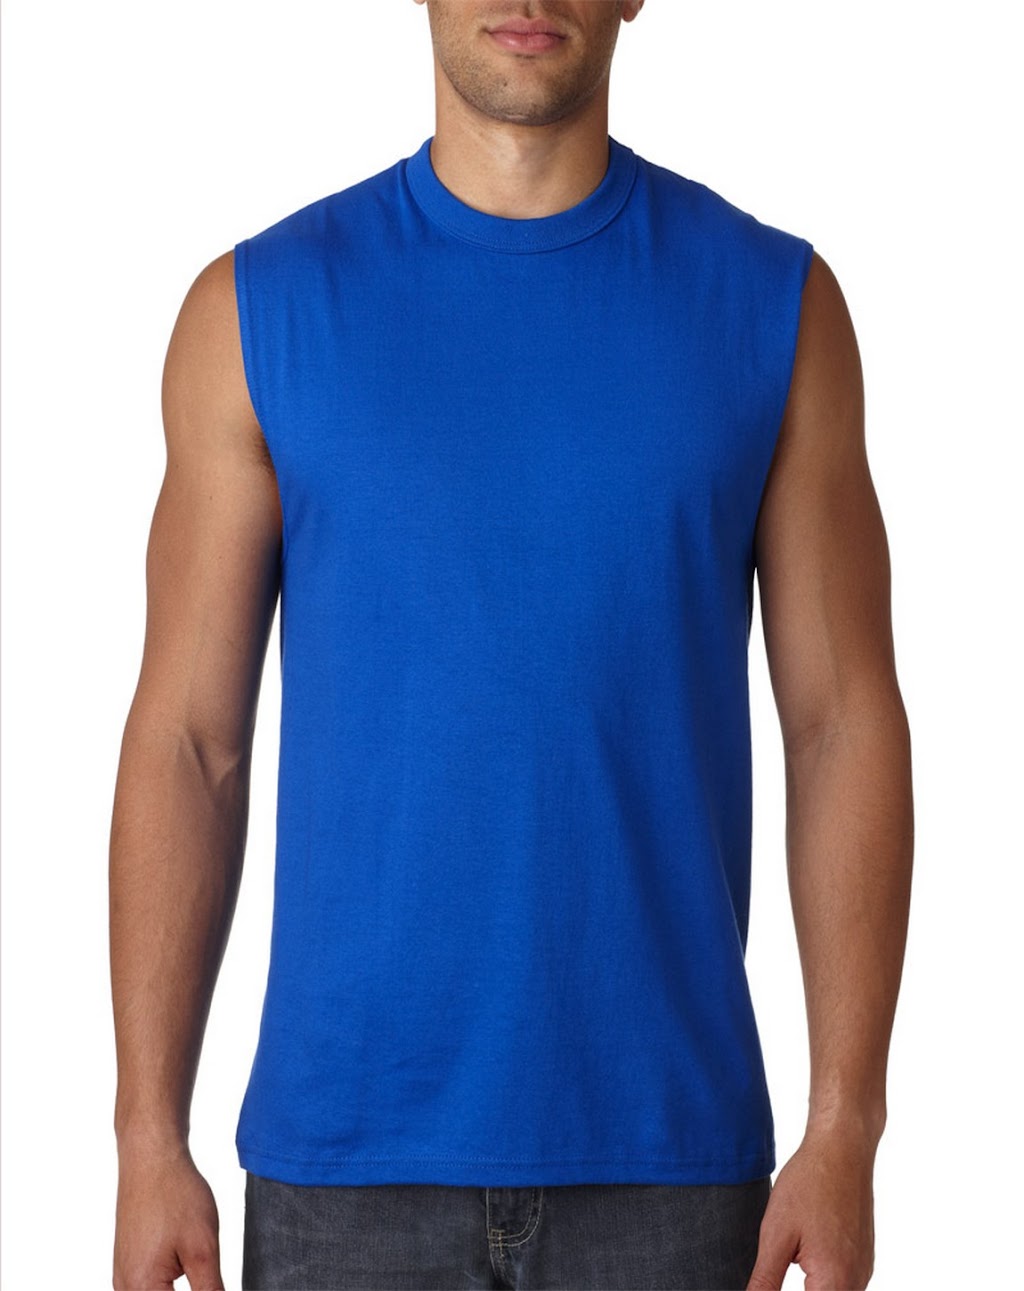 Buy Cool Shirts - Custom T-shirts | 307 US-27 D, Minneola, FL 34715 | Phone: (352) 708-6727